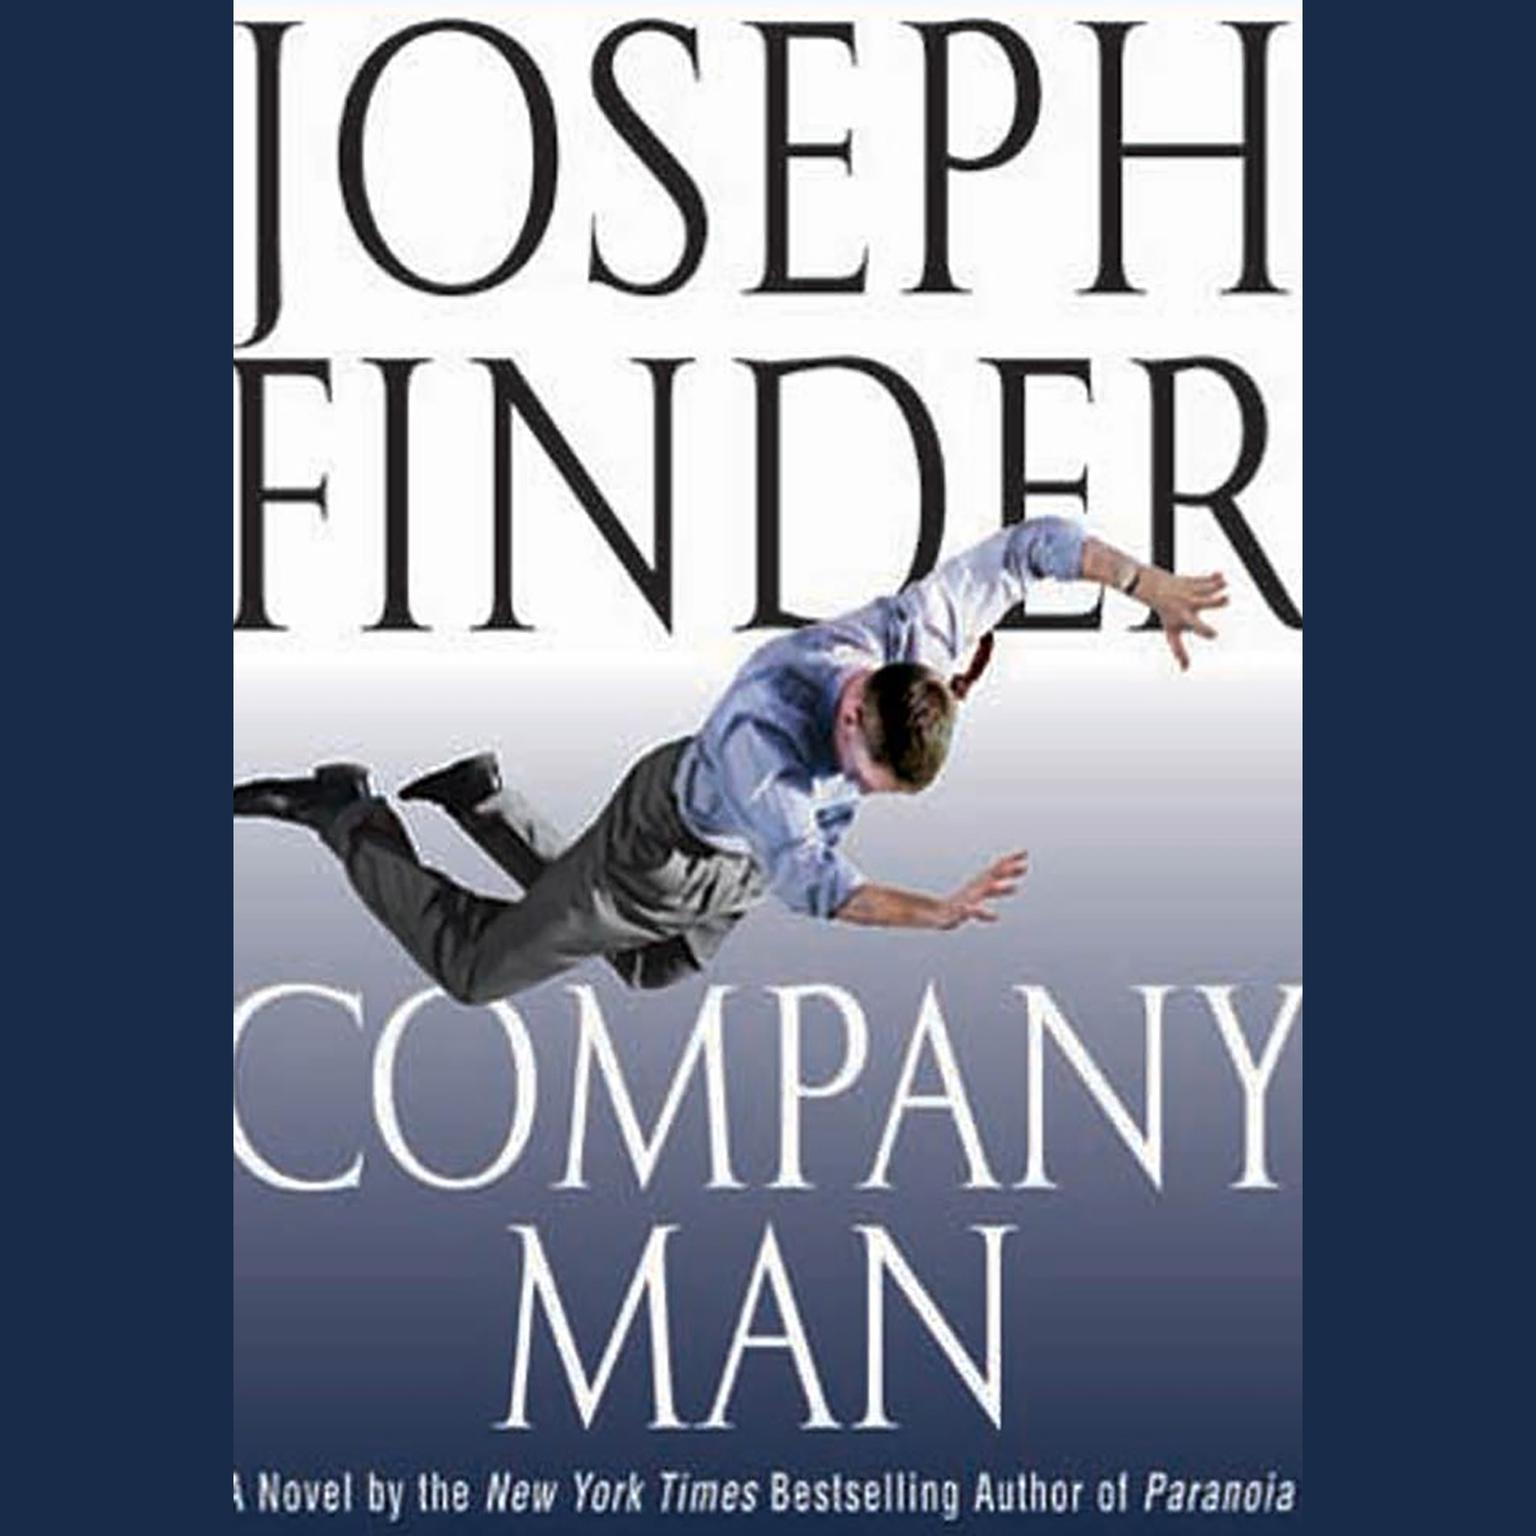 Company Man (Abridged): A Novel Audiobook, by Joseph Finder